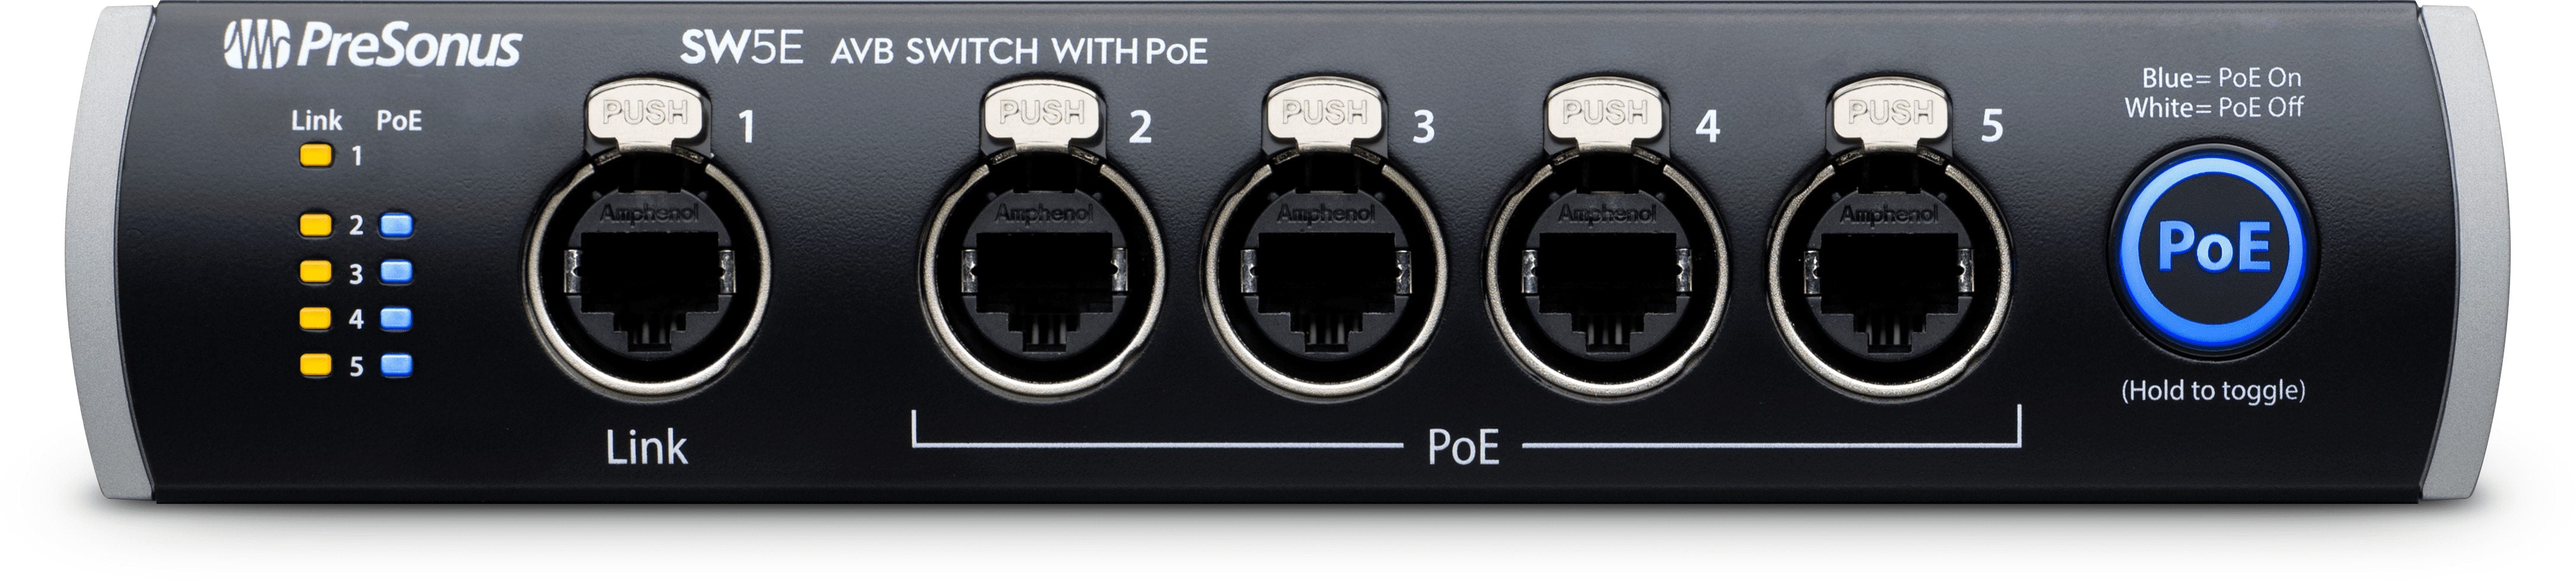 Presonus SW5E - AVB Switch with PoE